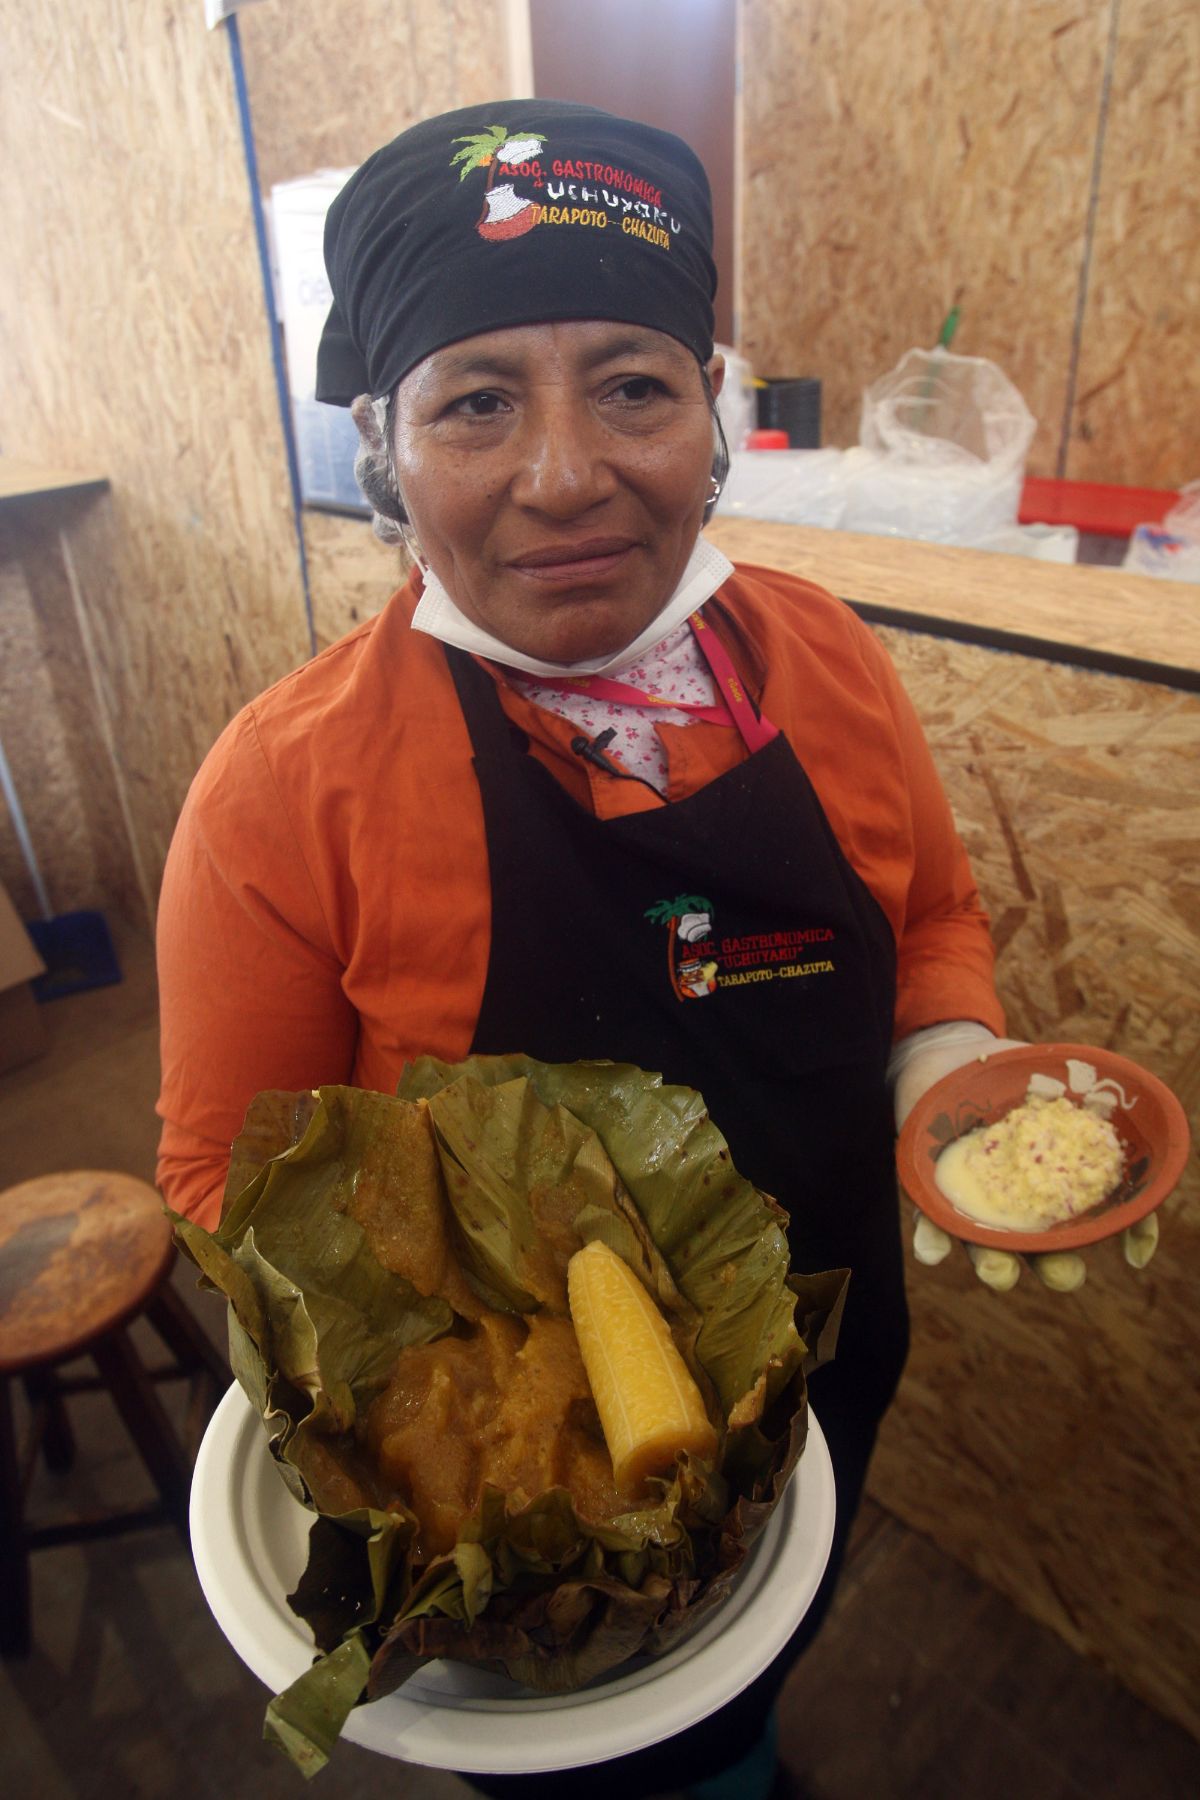 Restaurant Ushuyaku de Tarapoto en Nuestra de la Selva, ofrece su sabroso "Ruma Juane" en la Feria Gastronomica Internacional de Lima - Mistura 2013  ANDINA/Héctor Vinces